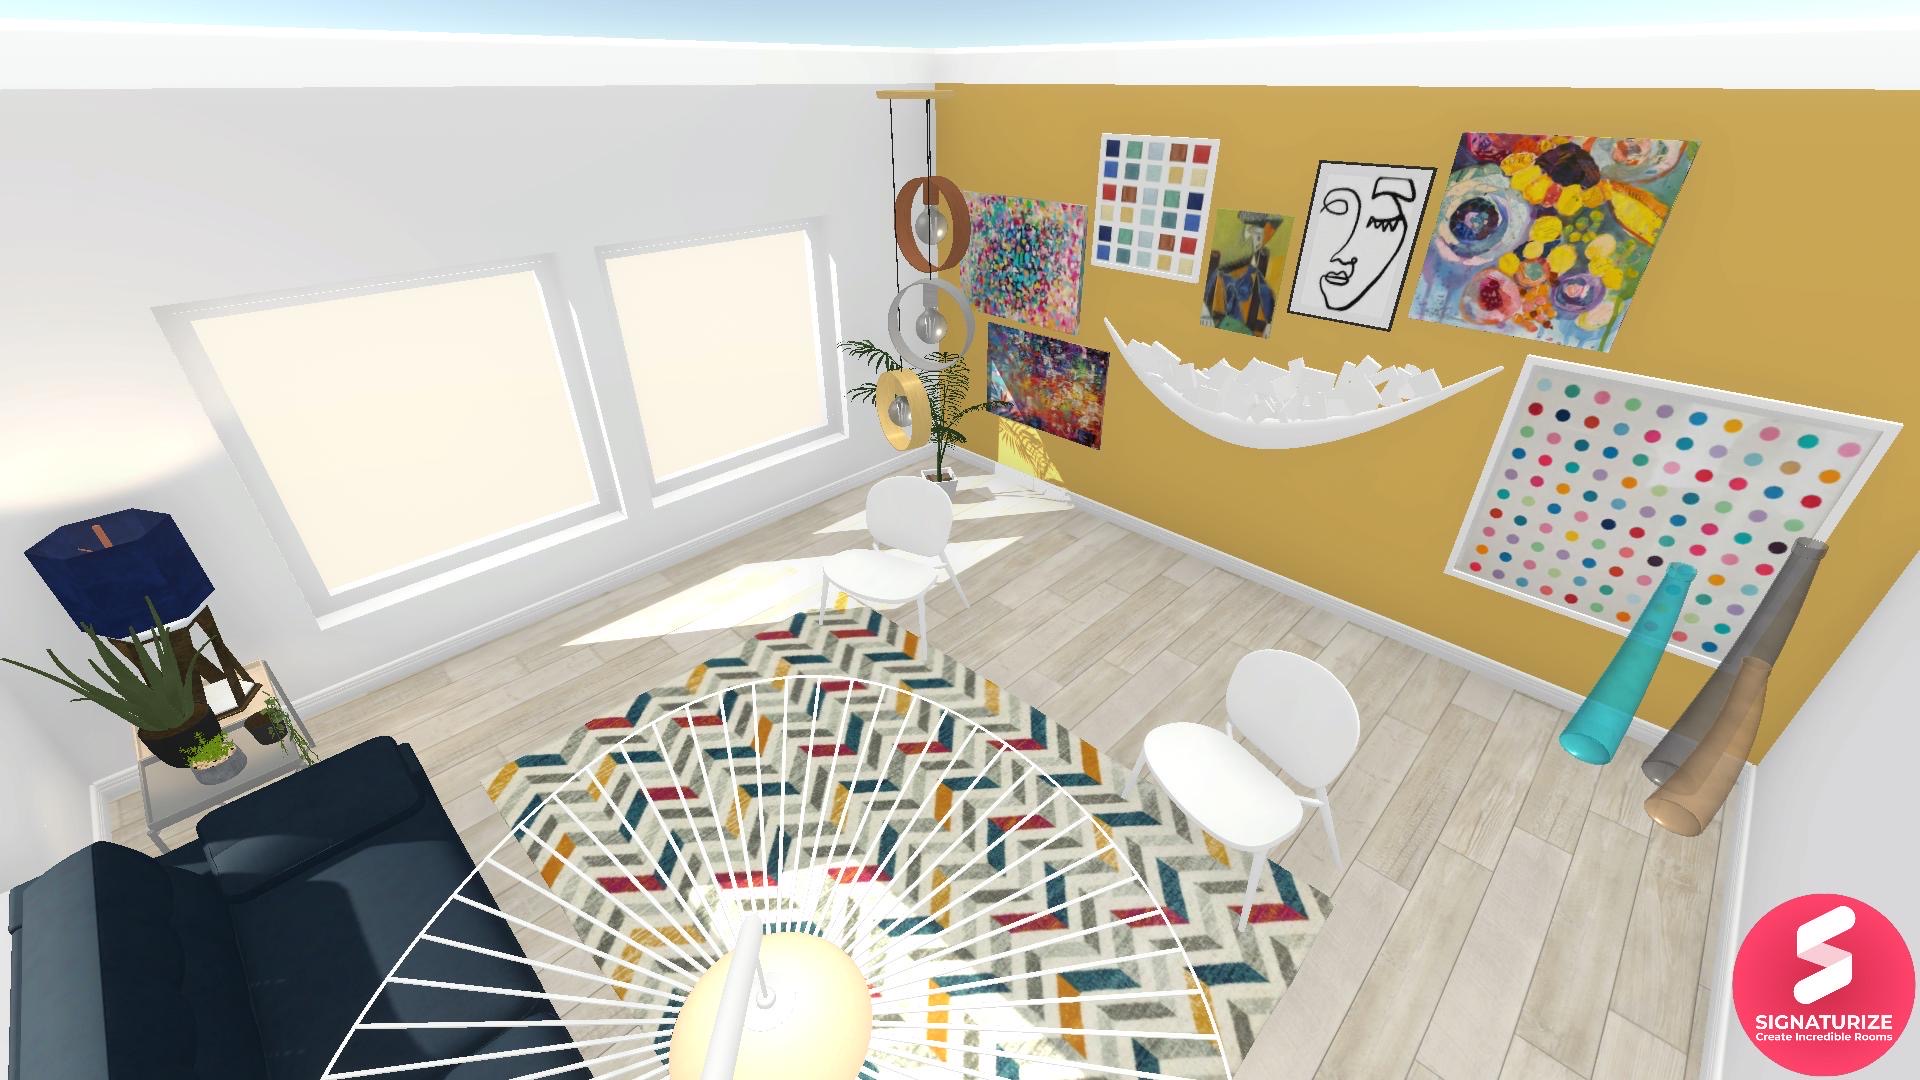 Living room idea with 3d Wall Art and com-temporary chevron rug